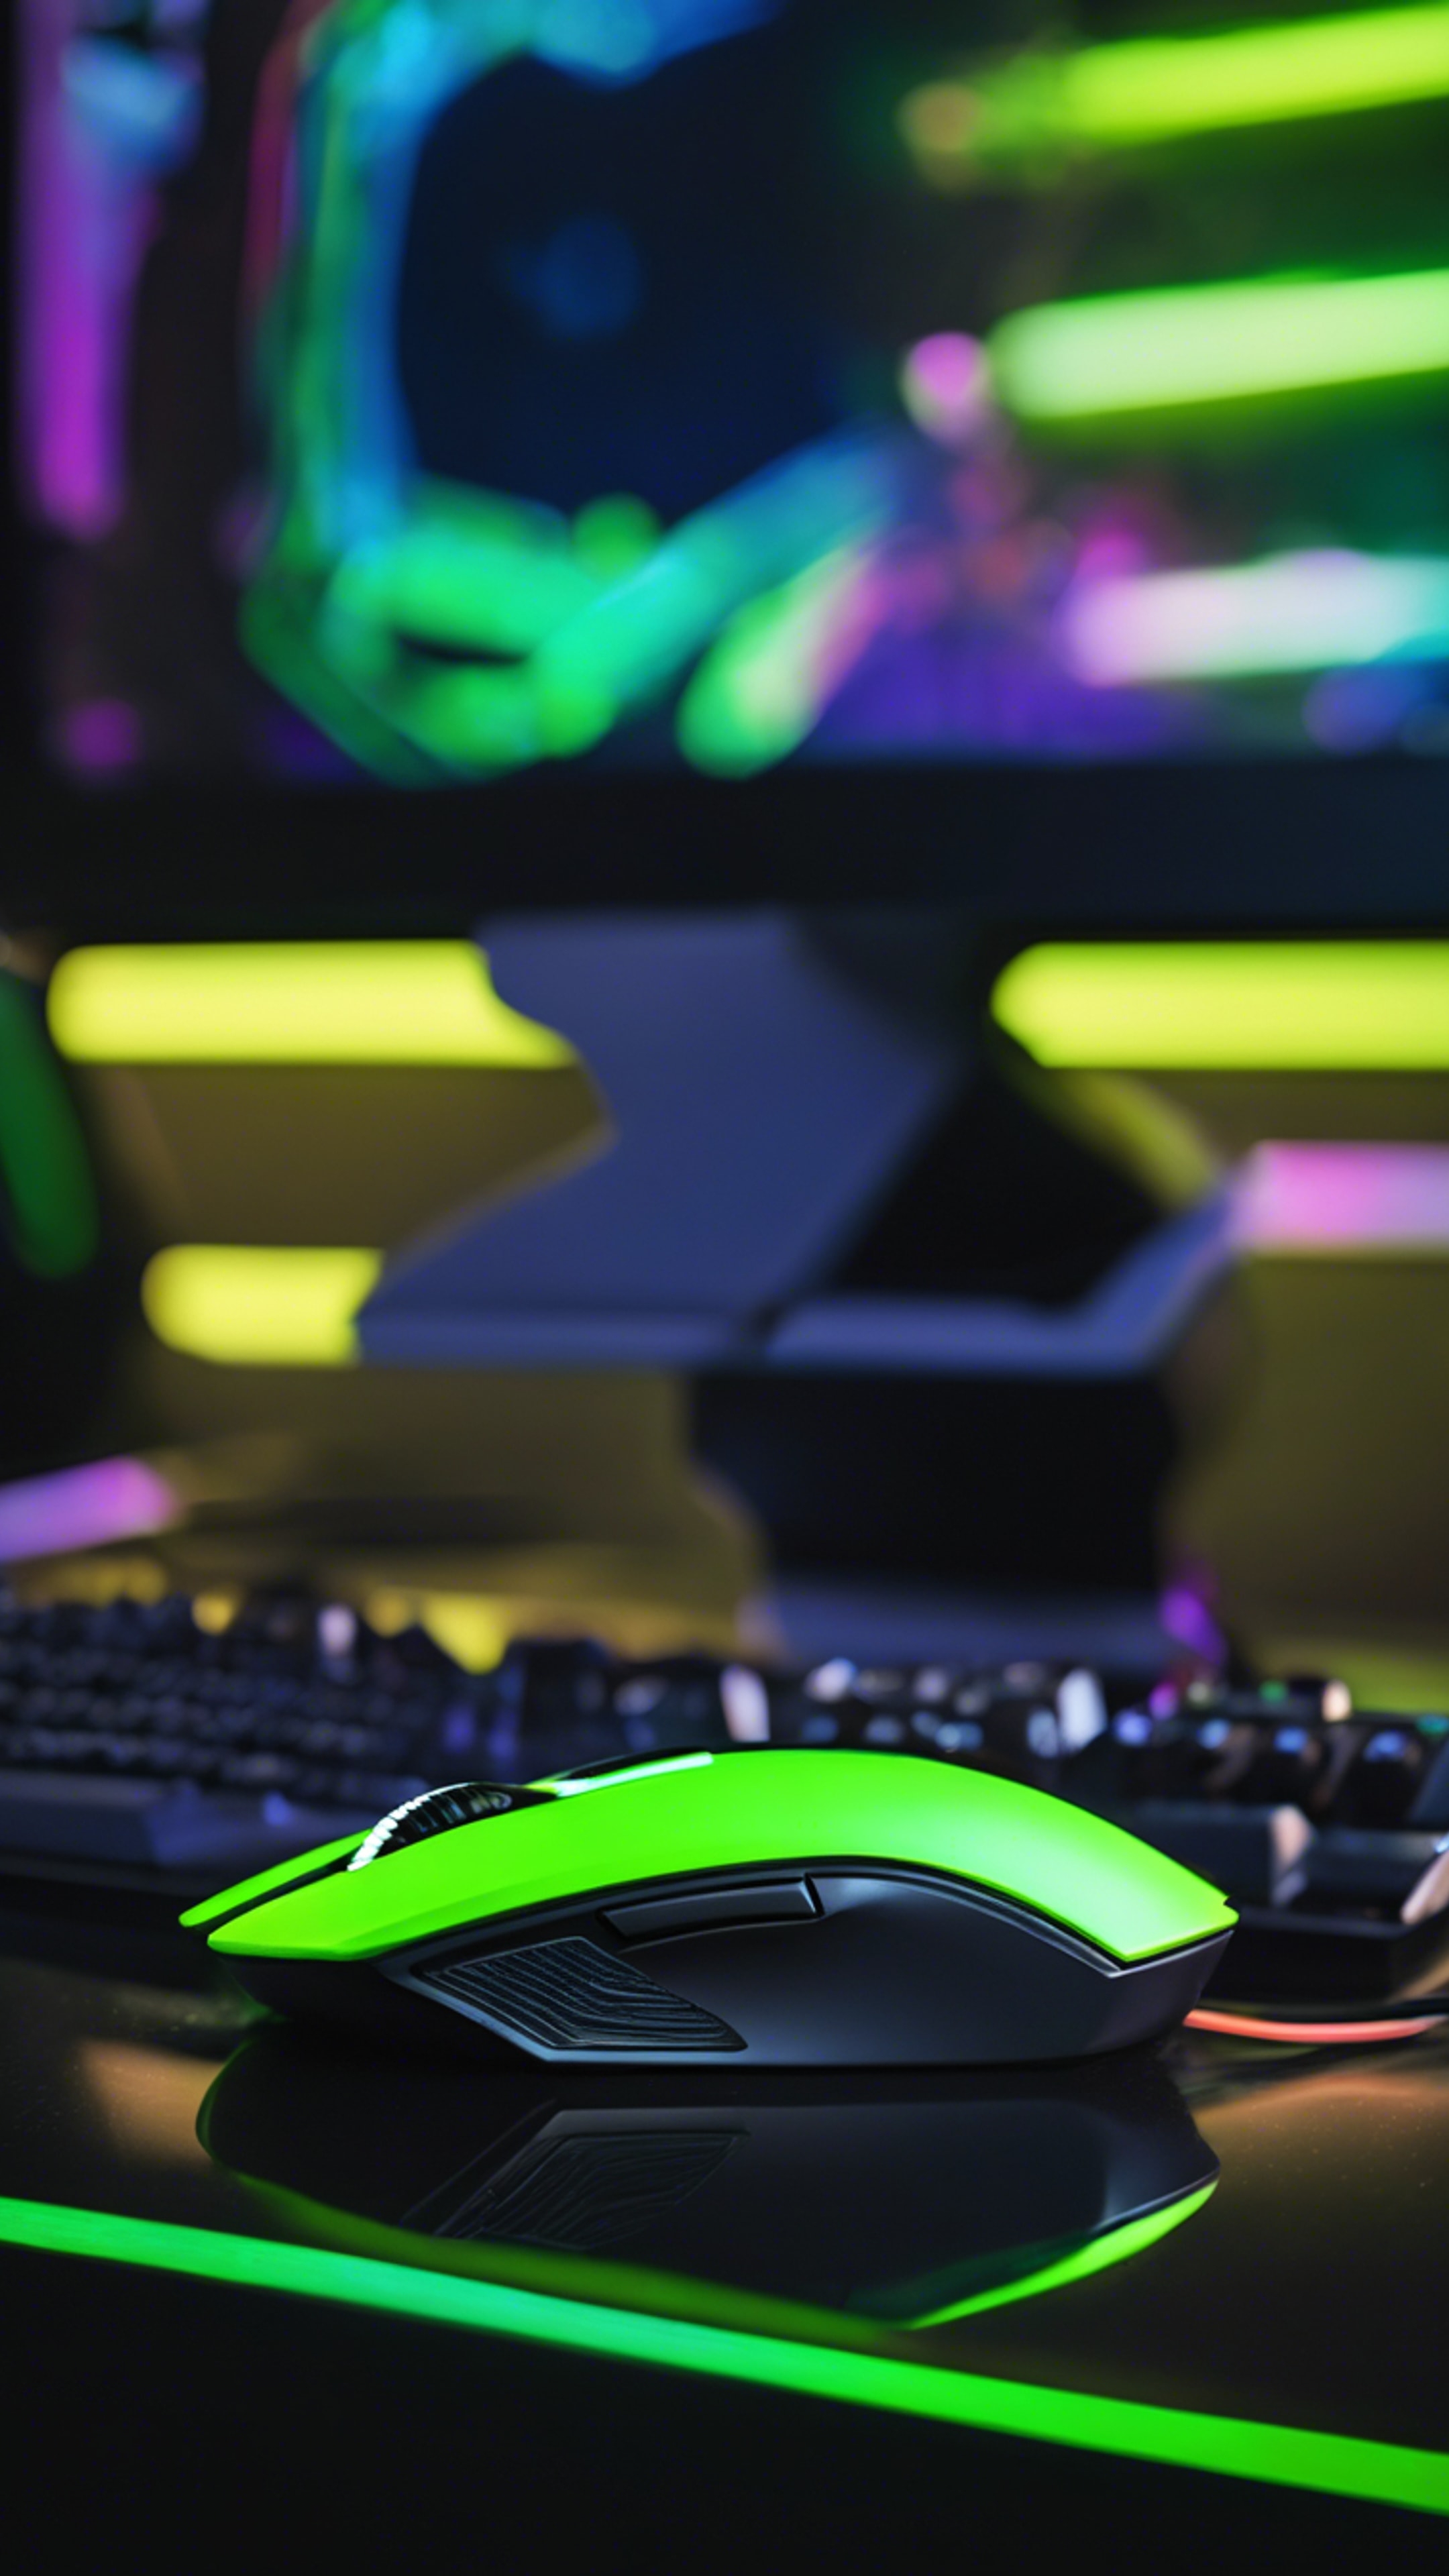 A cool neon green high-tech gaming mouse on a futuristic black desk setup. Wallpaper[6d2a2b9049aa4c81a995]